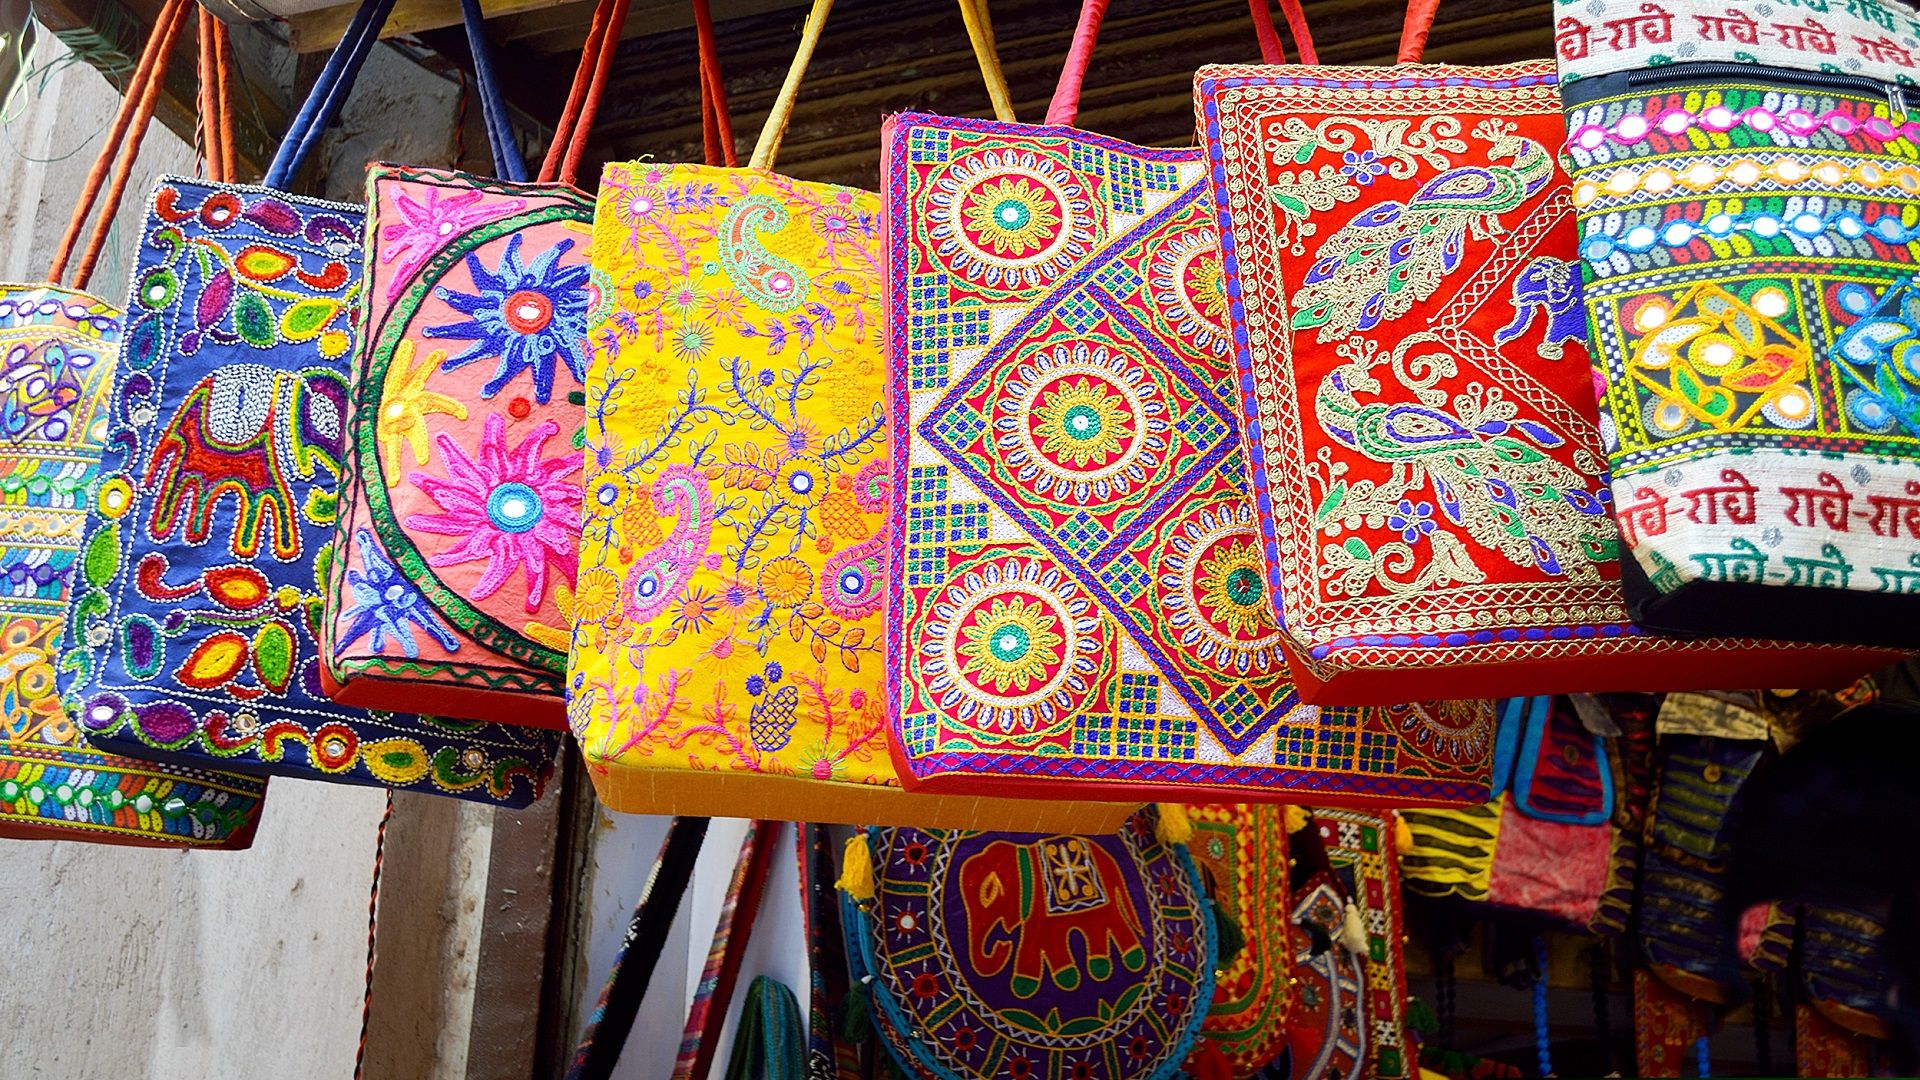 Flea markets in India